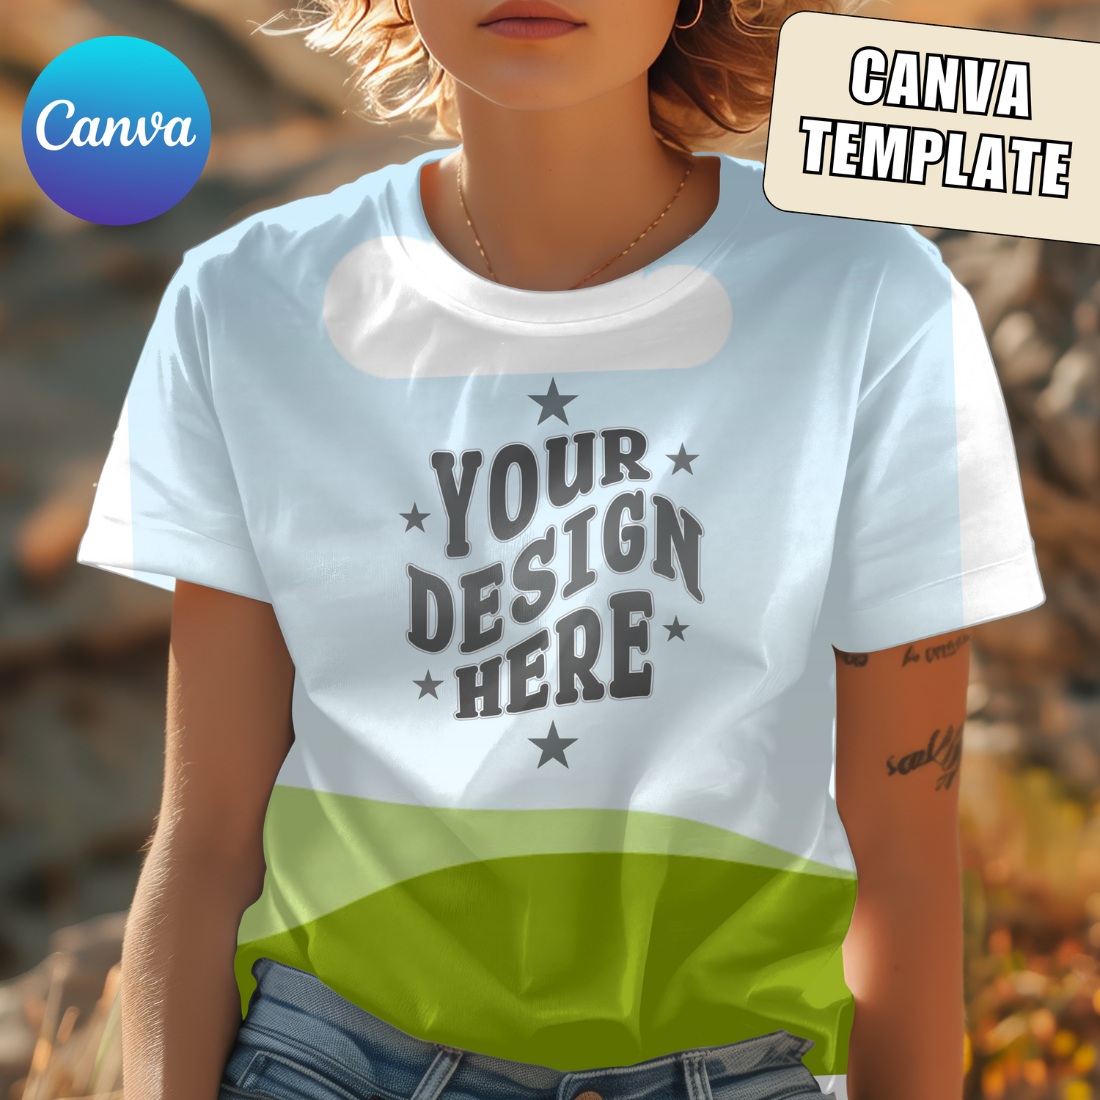 T-Shirt Template Canva Bella Canvas 3001 Mockup + Tutorial cover image.